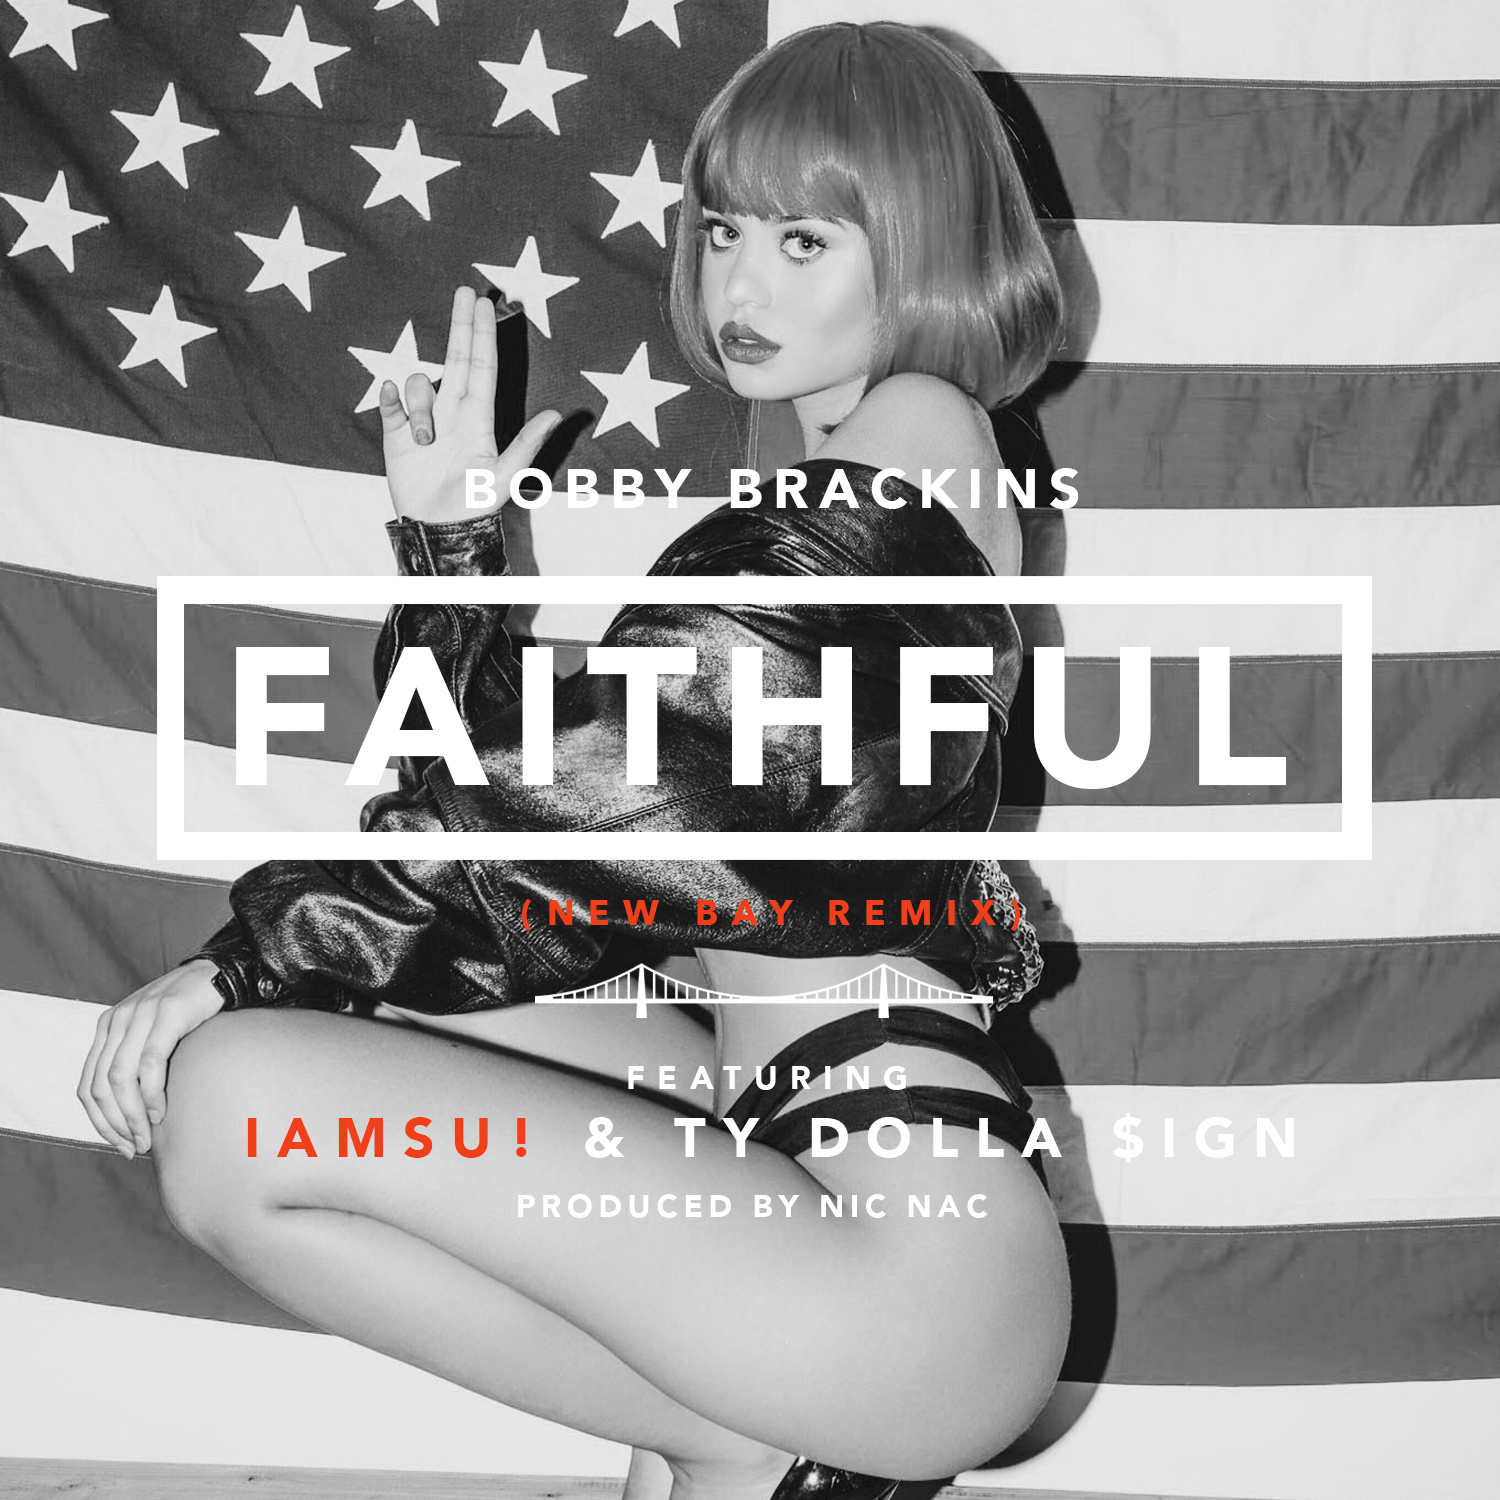 Bobby Brackins feat. IAMSU! & Ty Dolla $ign - Faithful (New Bay Remix) - Cover Artwork